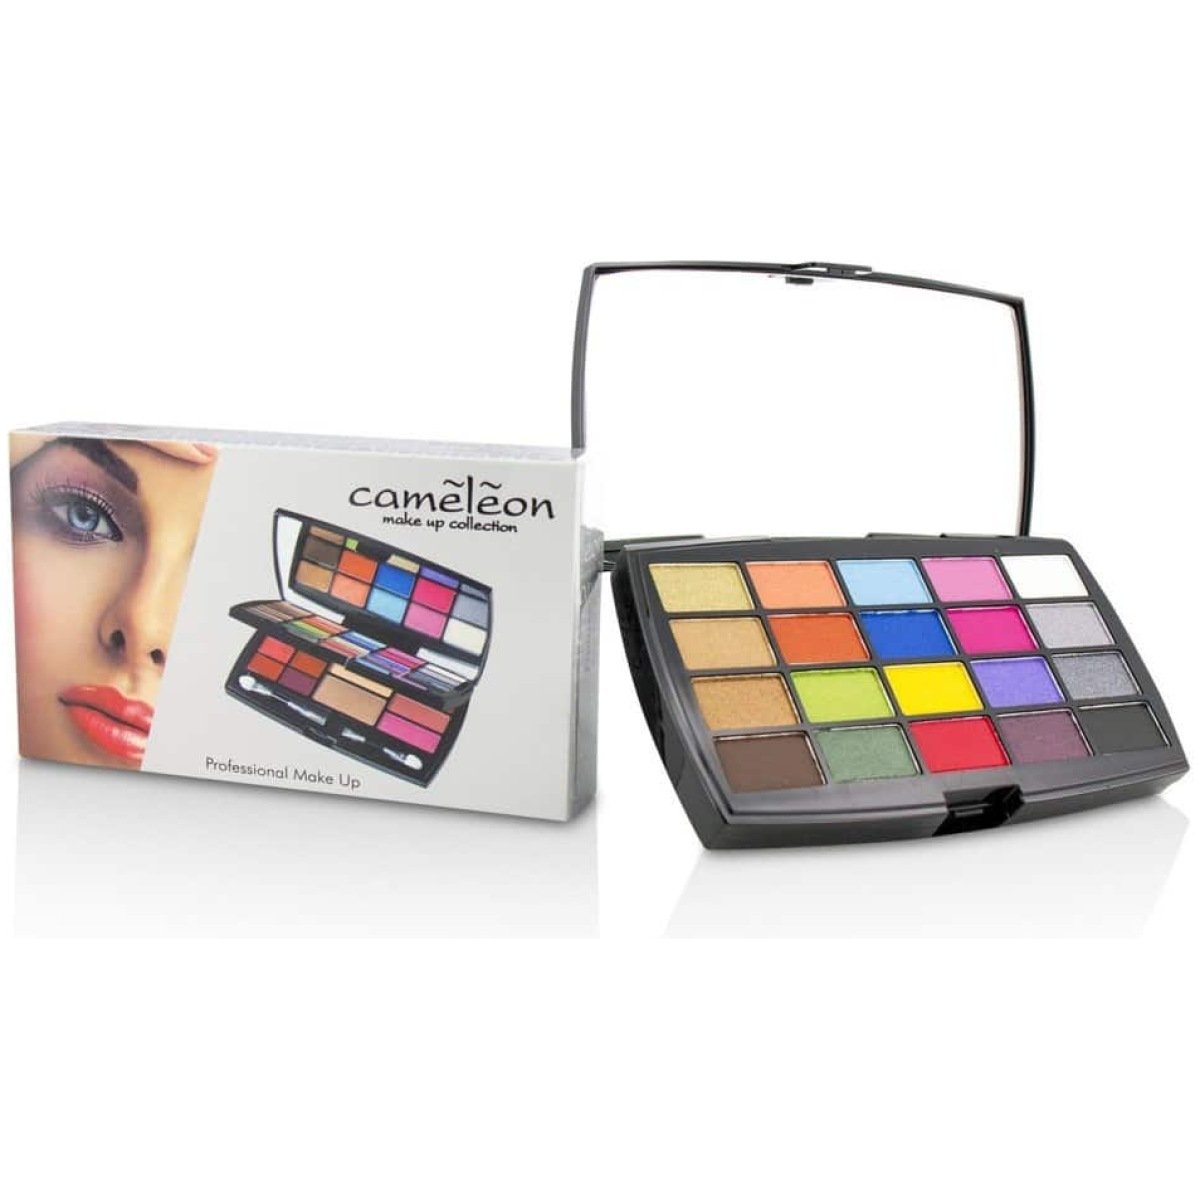 Cameleon Makeup Kit Deluxe G2127 20X Eyeshadow 3X Blusher 2X Pressed Powder 6X Lipgloss 2X Applicator 214053